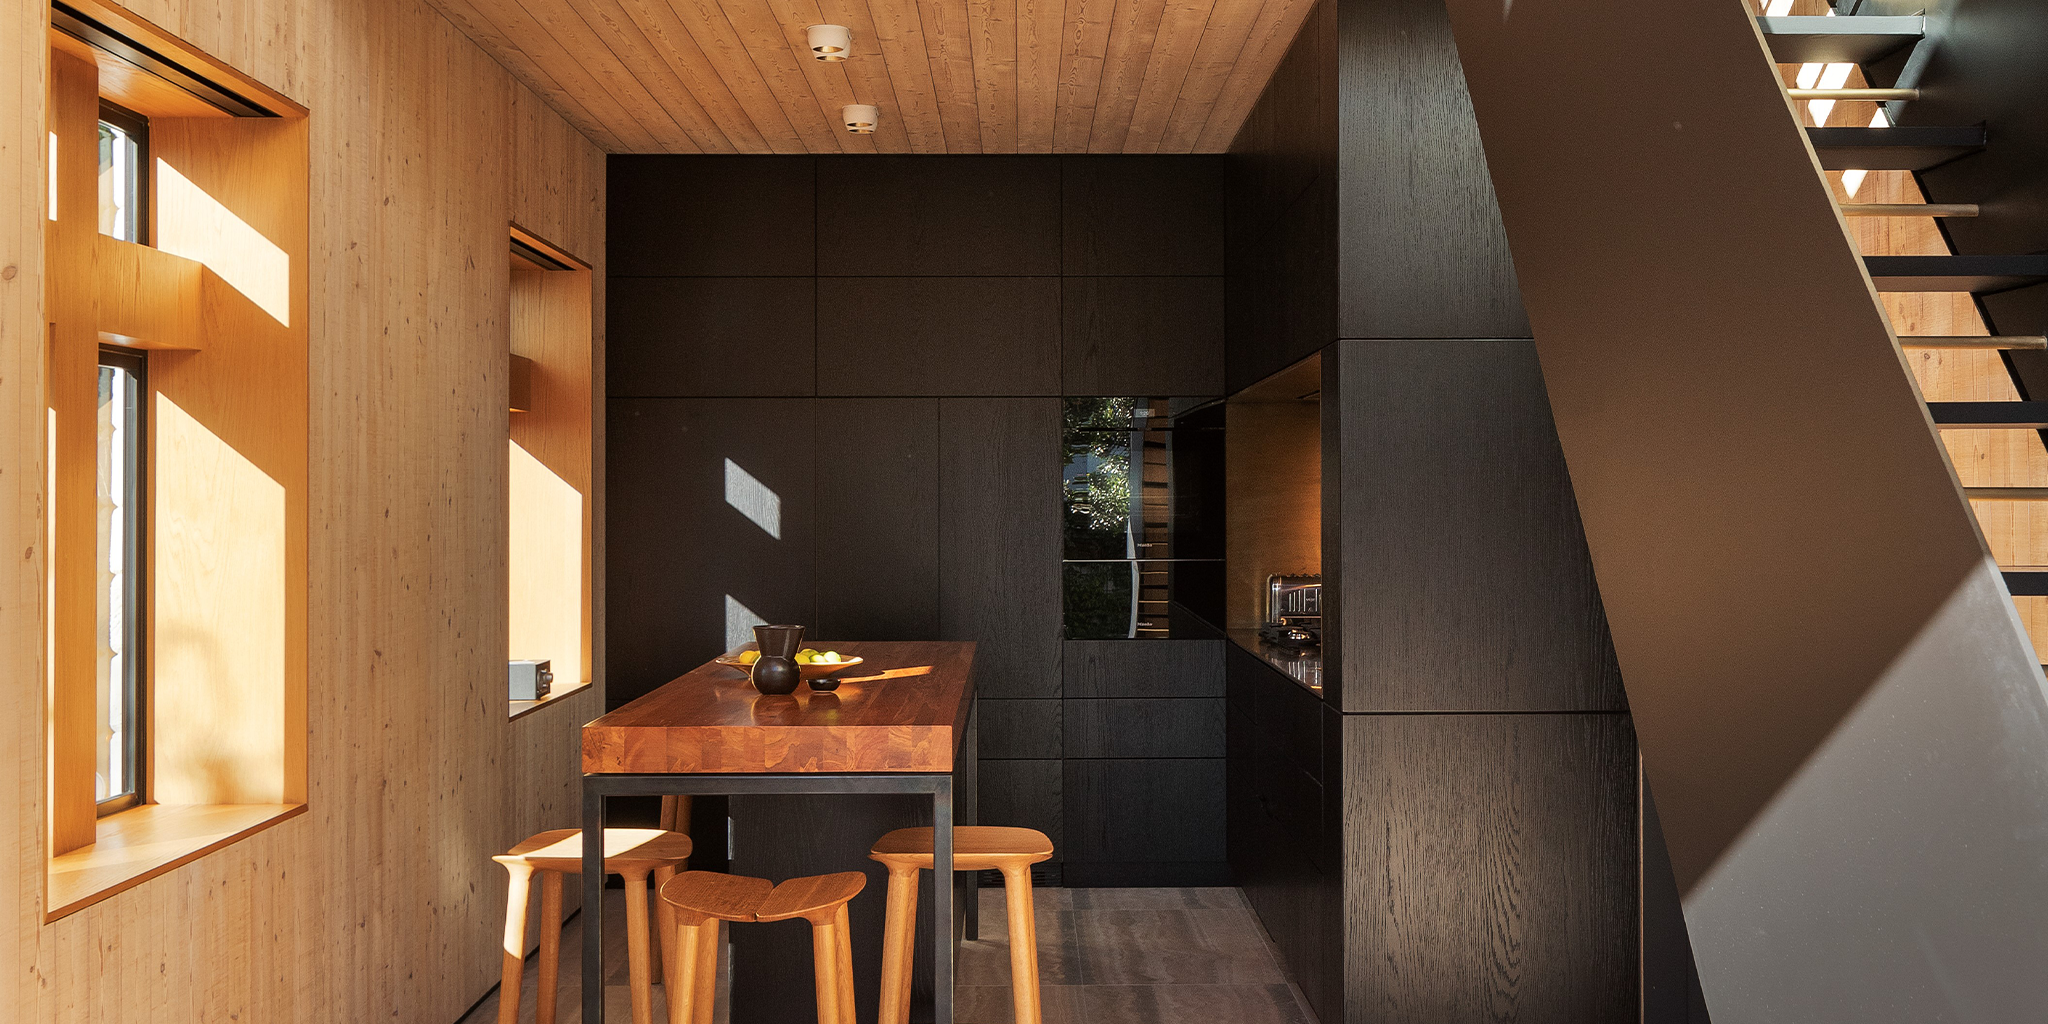 PAV Planked Daniel Sullivan and Kate Loader Architects' Creative